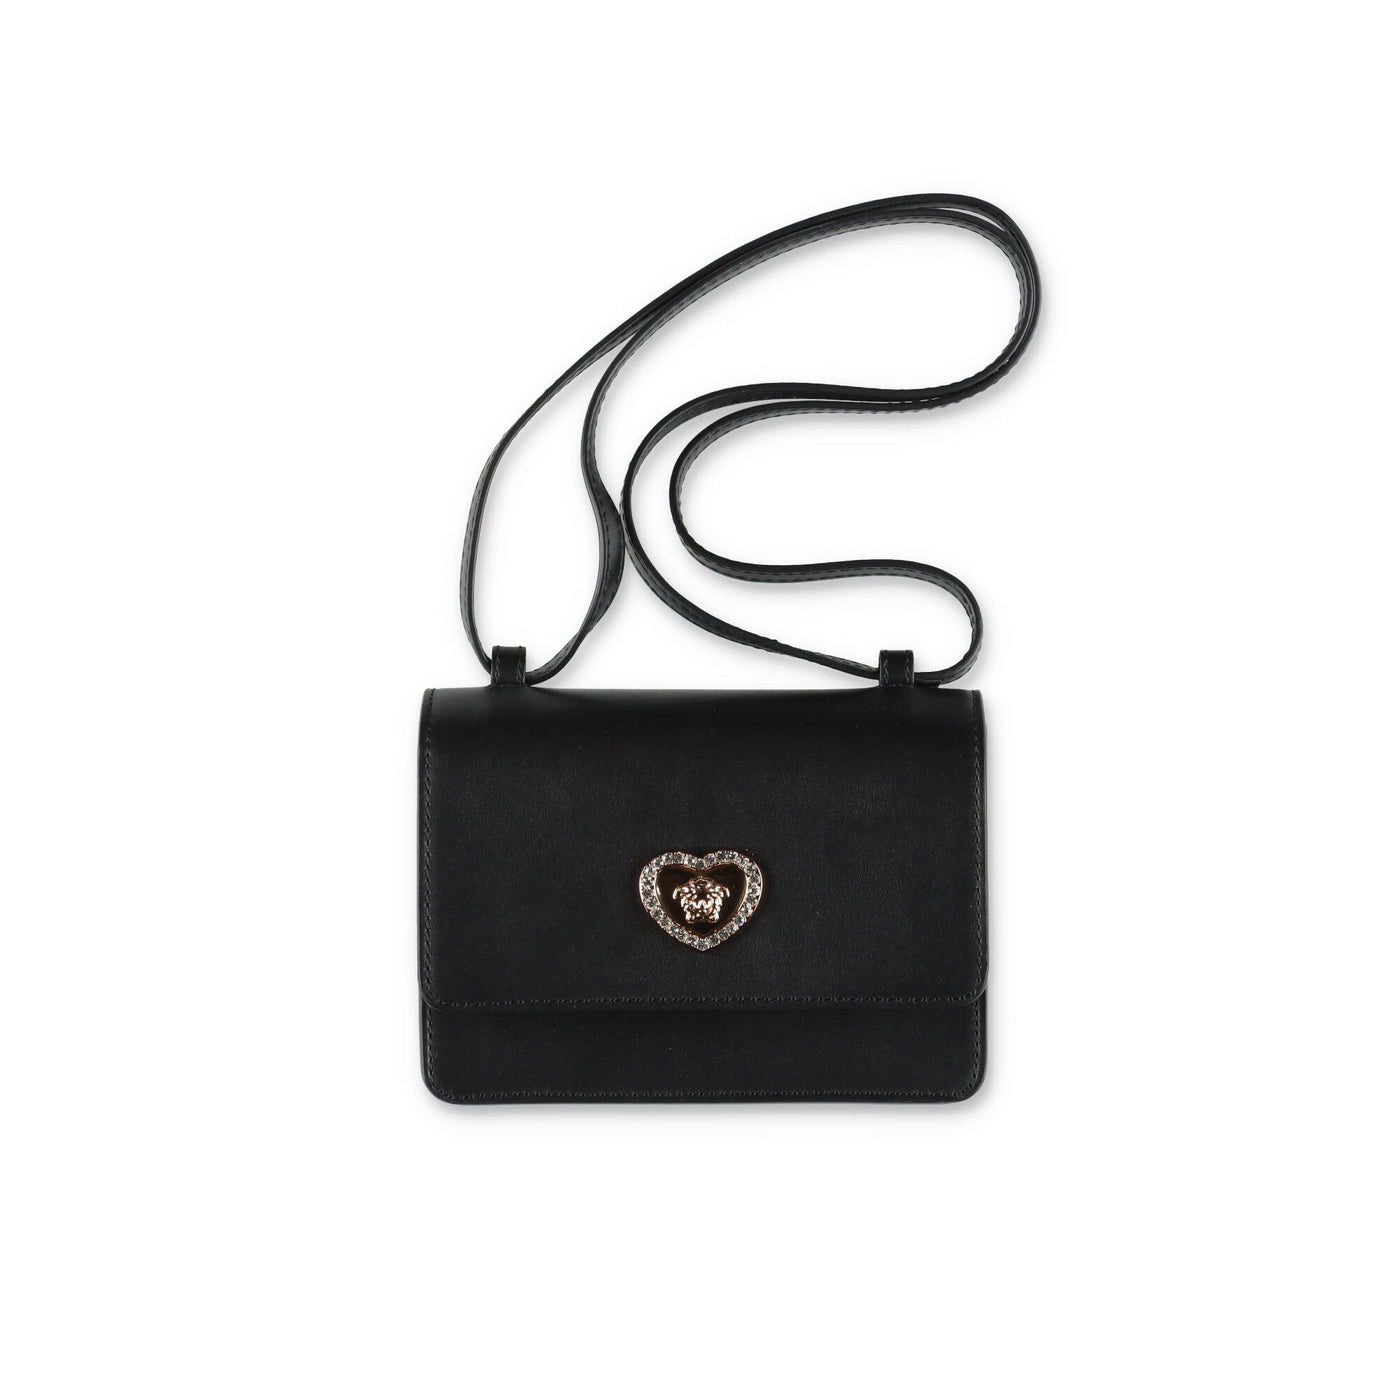 Black leather girl VERSACE shoulder bag | Carofiglio Junior